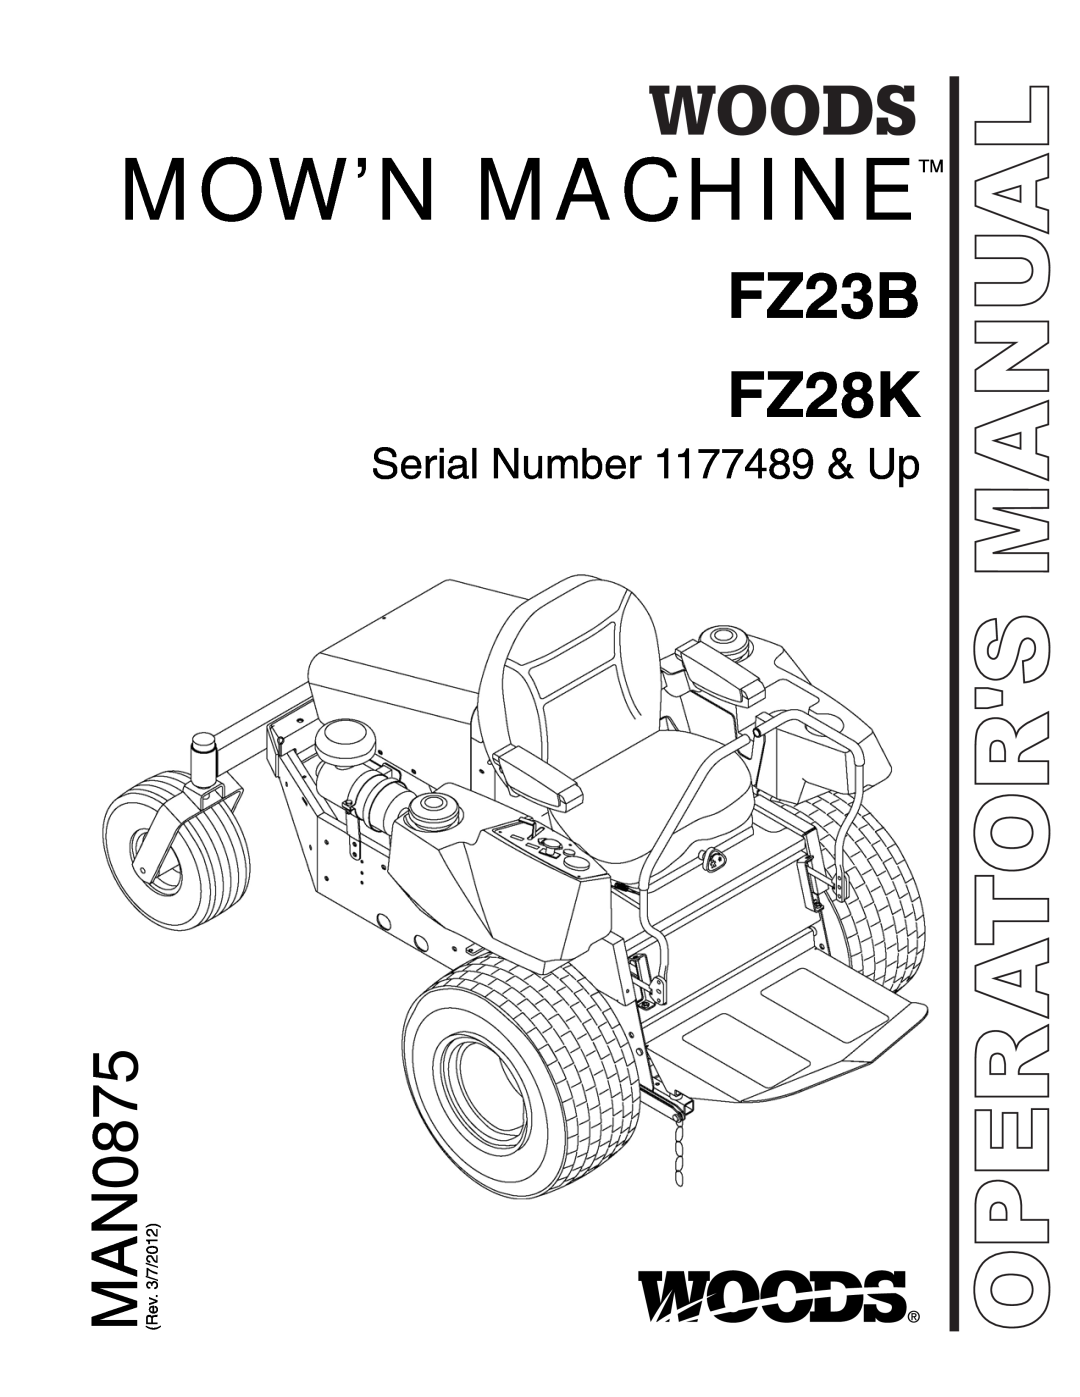 Woods Equipment manual FZ23B FZ28K, Mow’N Machinetm, Serial Number 1177489 & Up, Operators Manual 